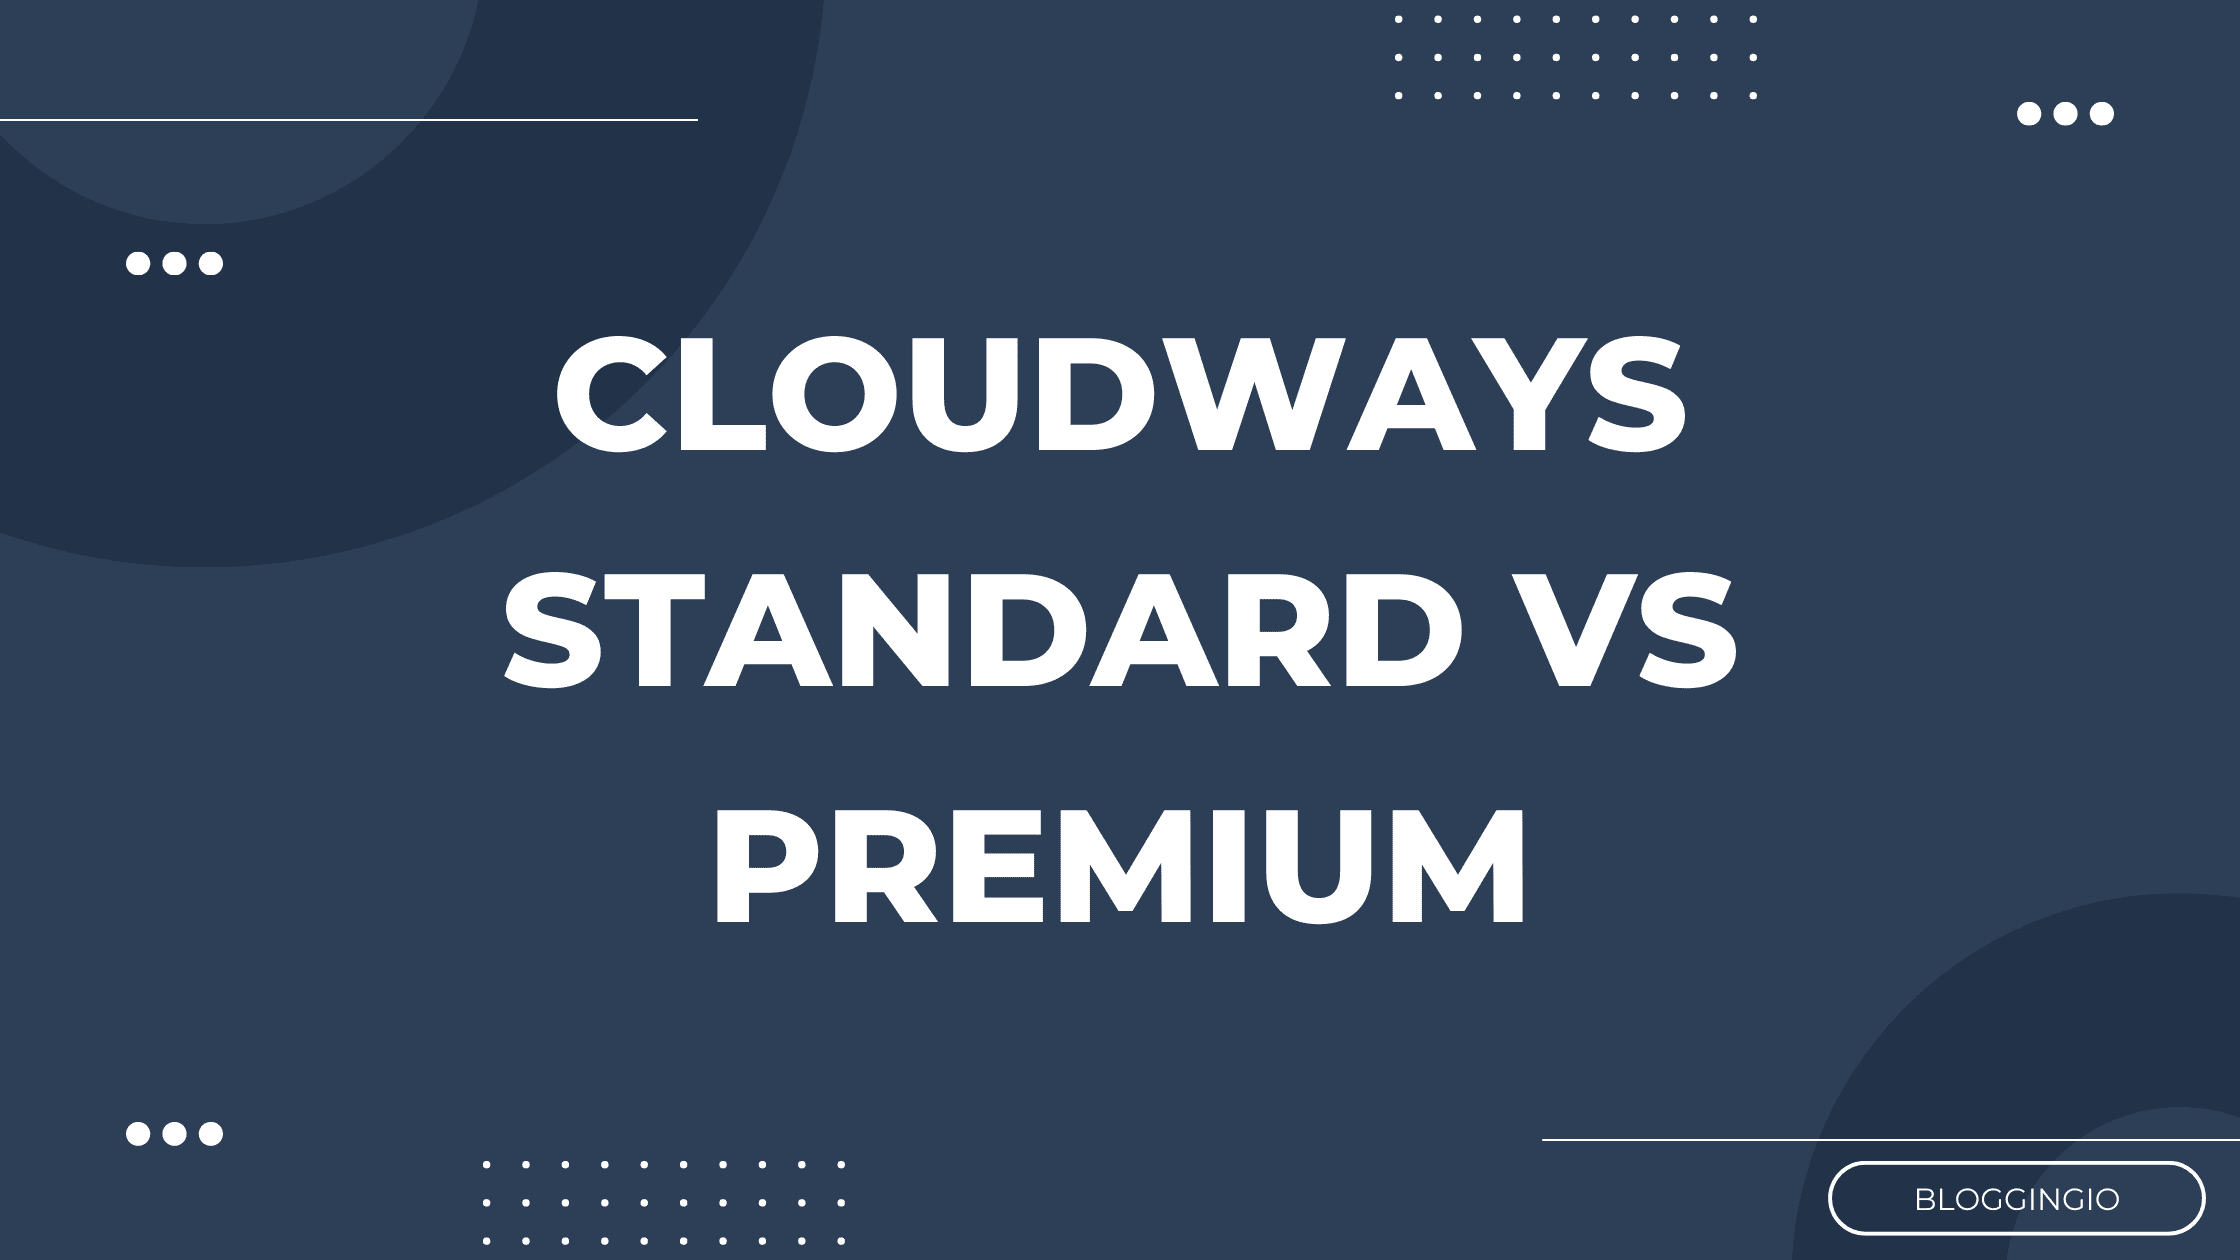 Cloudways Premium Vs Standard - Which is best? 2